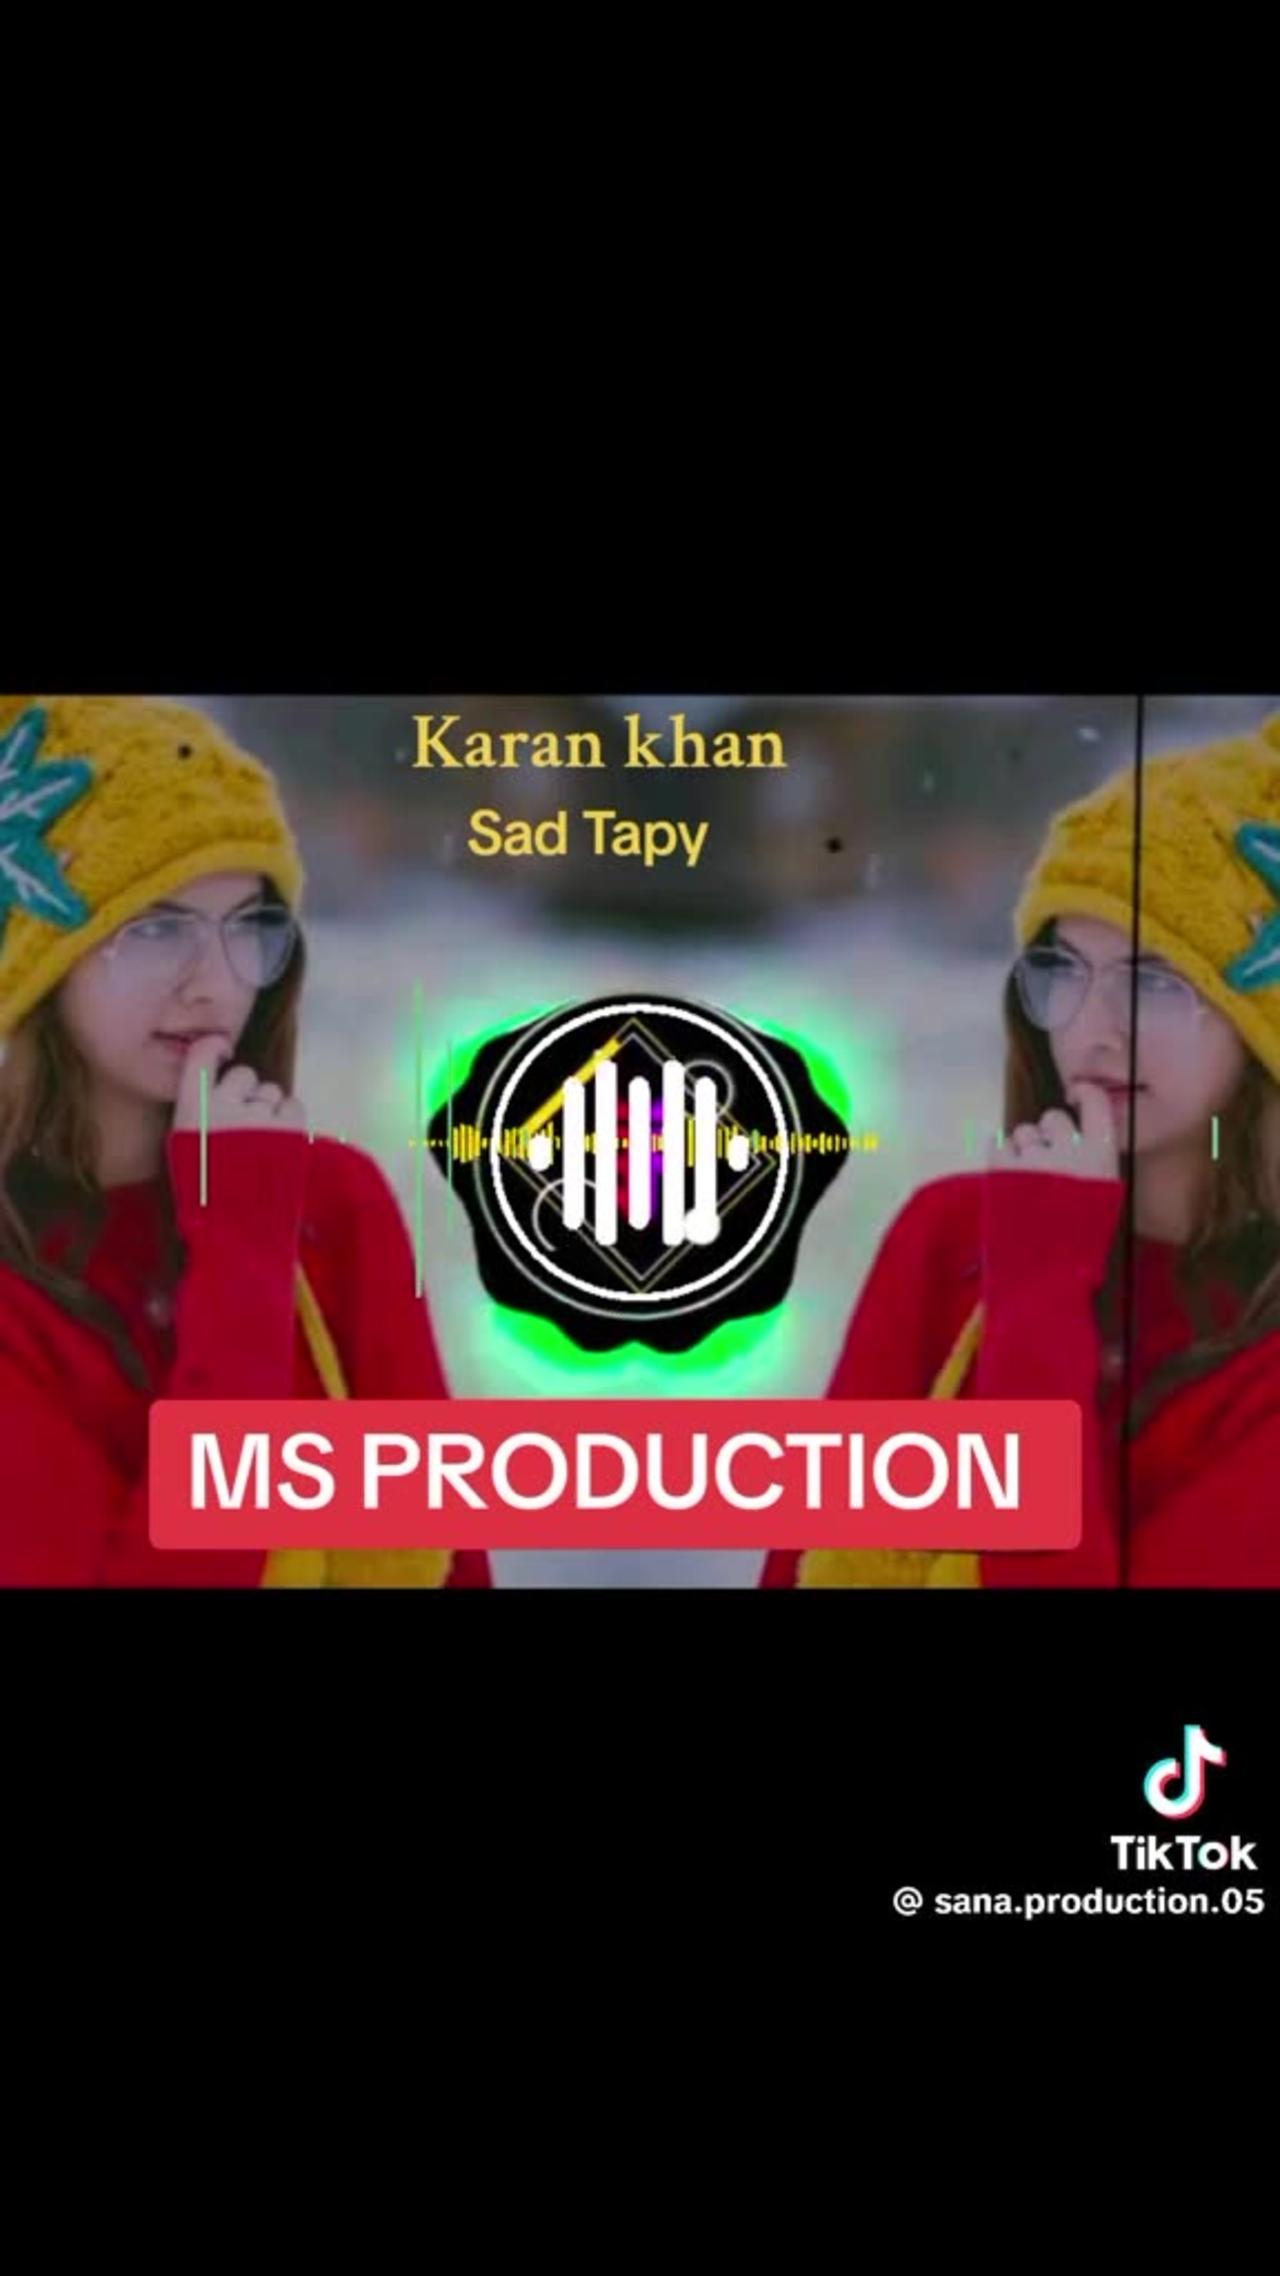 Karan khan